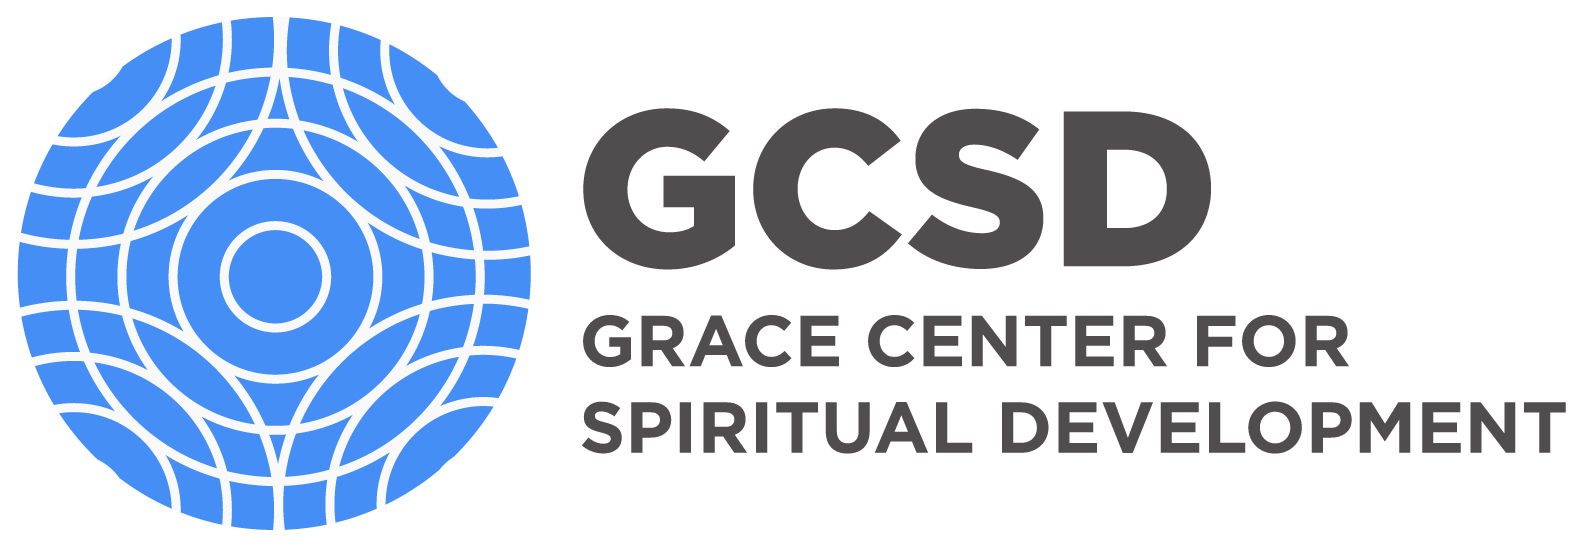 Grace Center for Spiritual Development